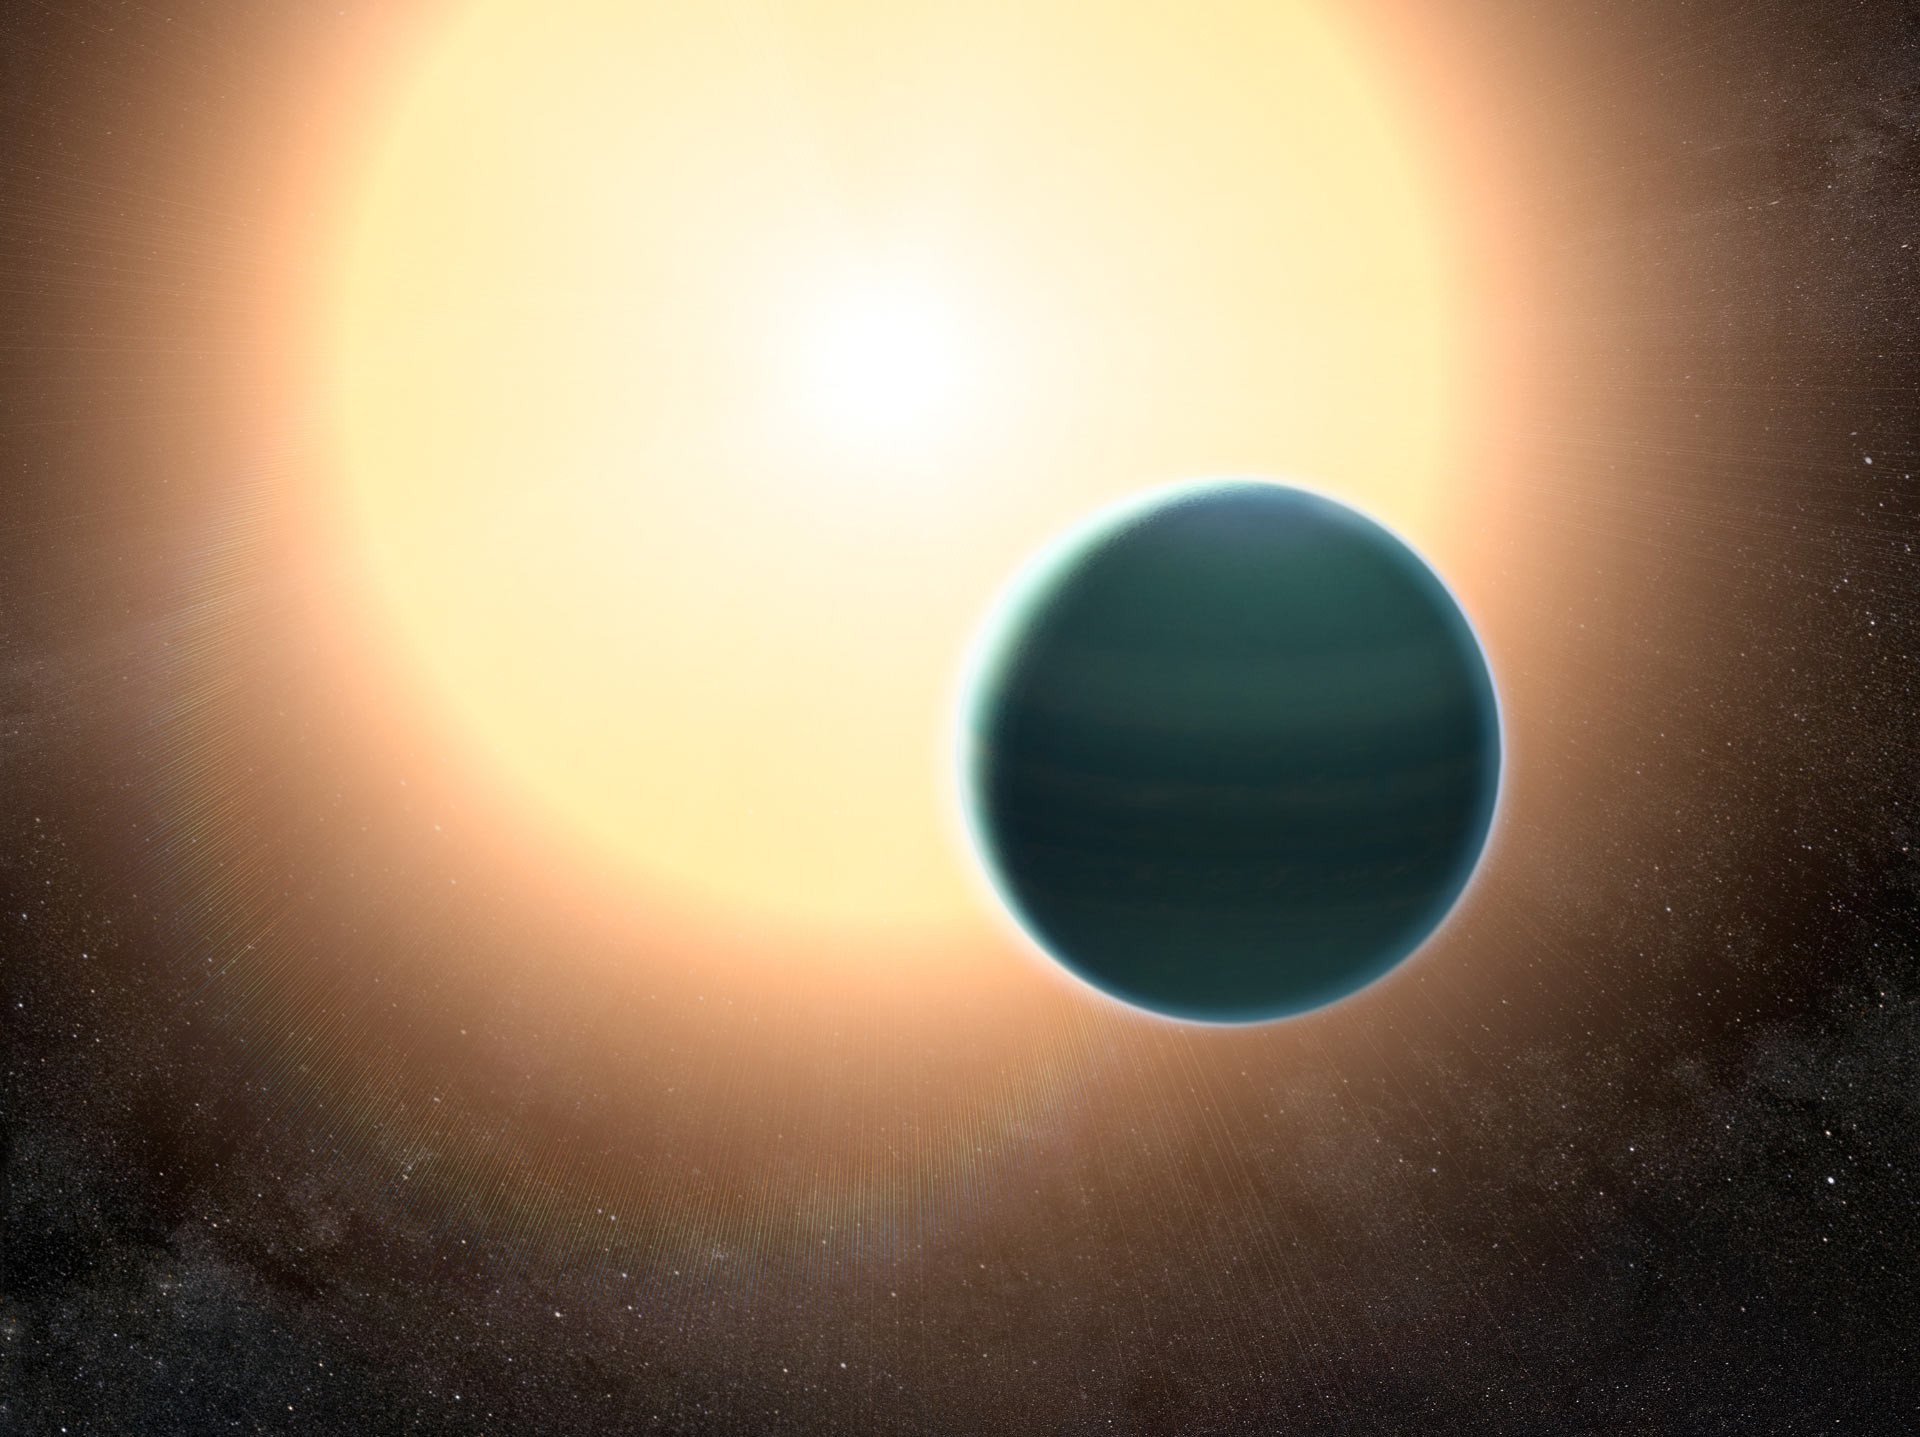 Hat p. Экзопланета Kelt-9b. Экзопланета Нептун. Планета hat-p-7 b. Kelt 9b Планета.